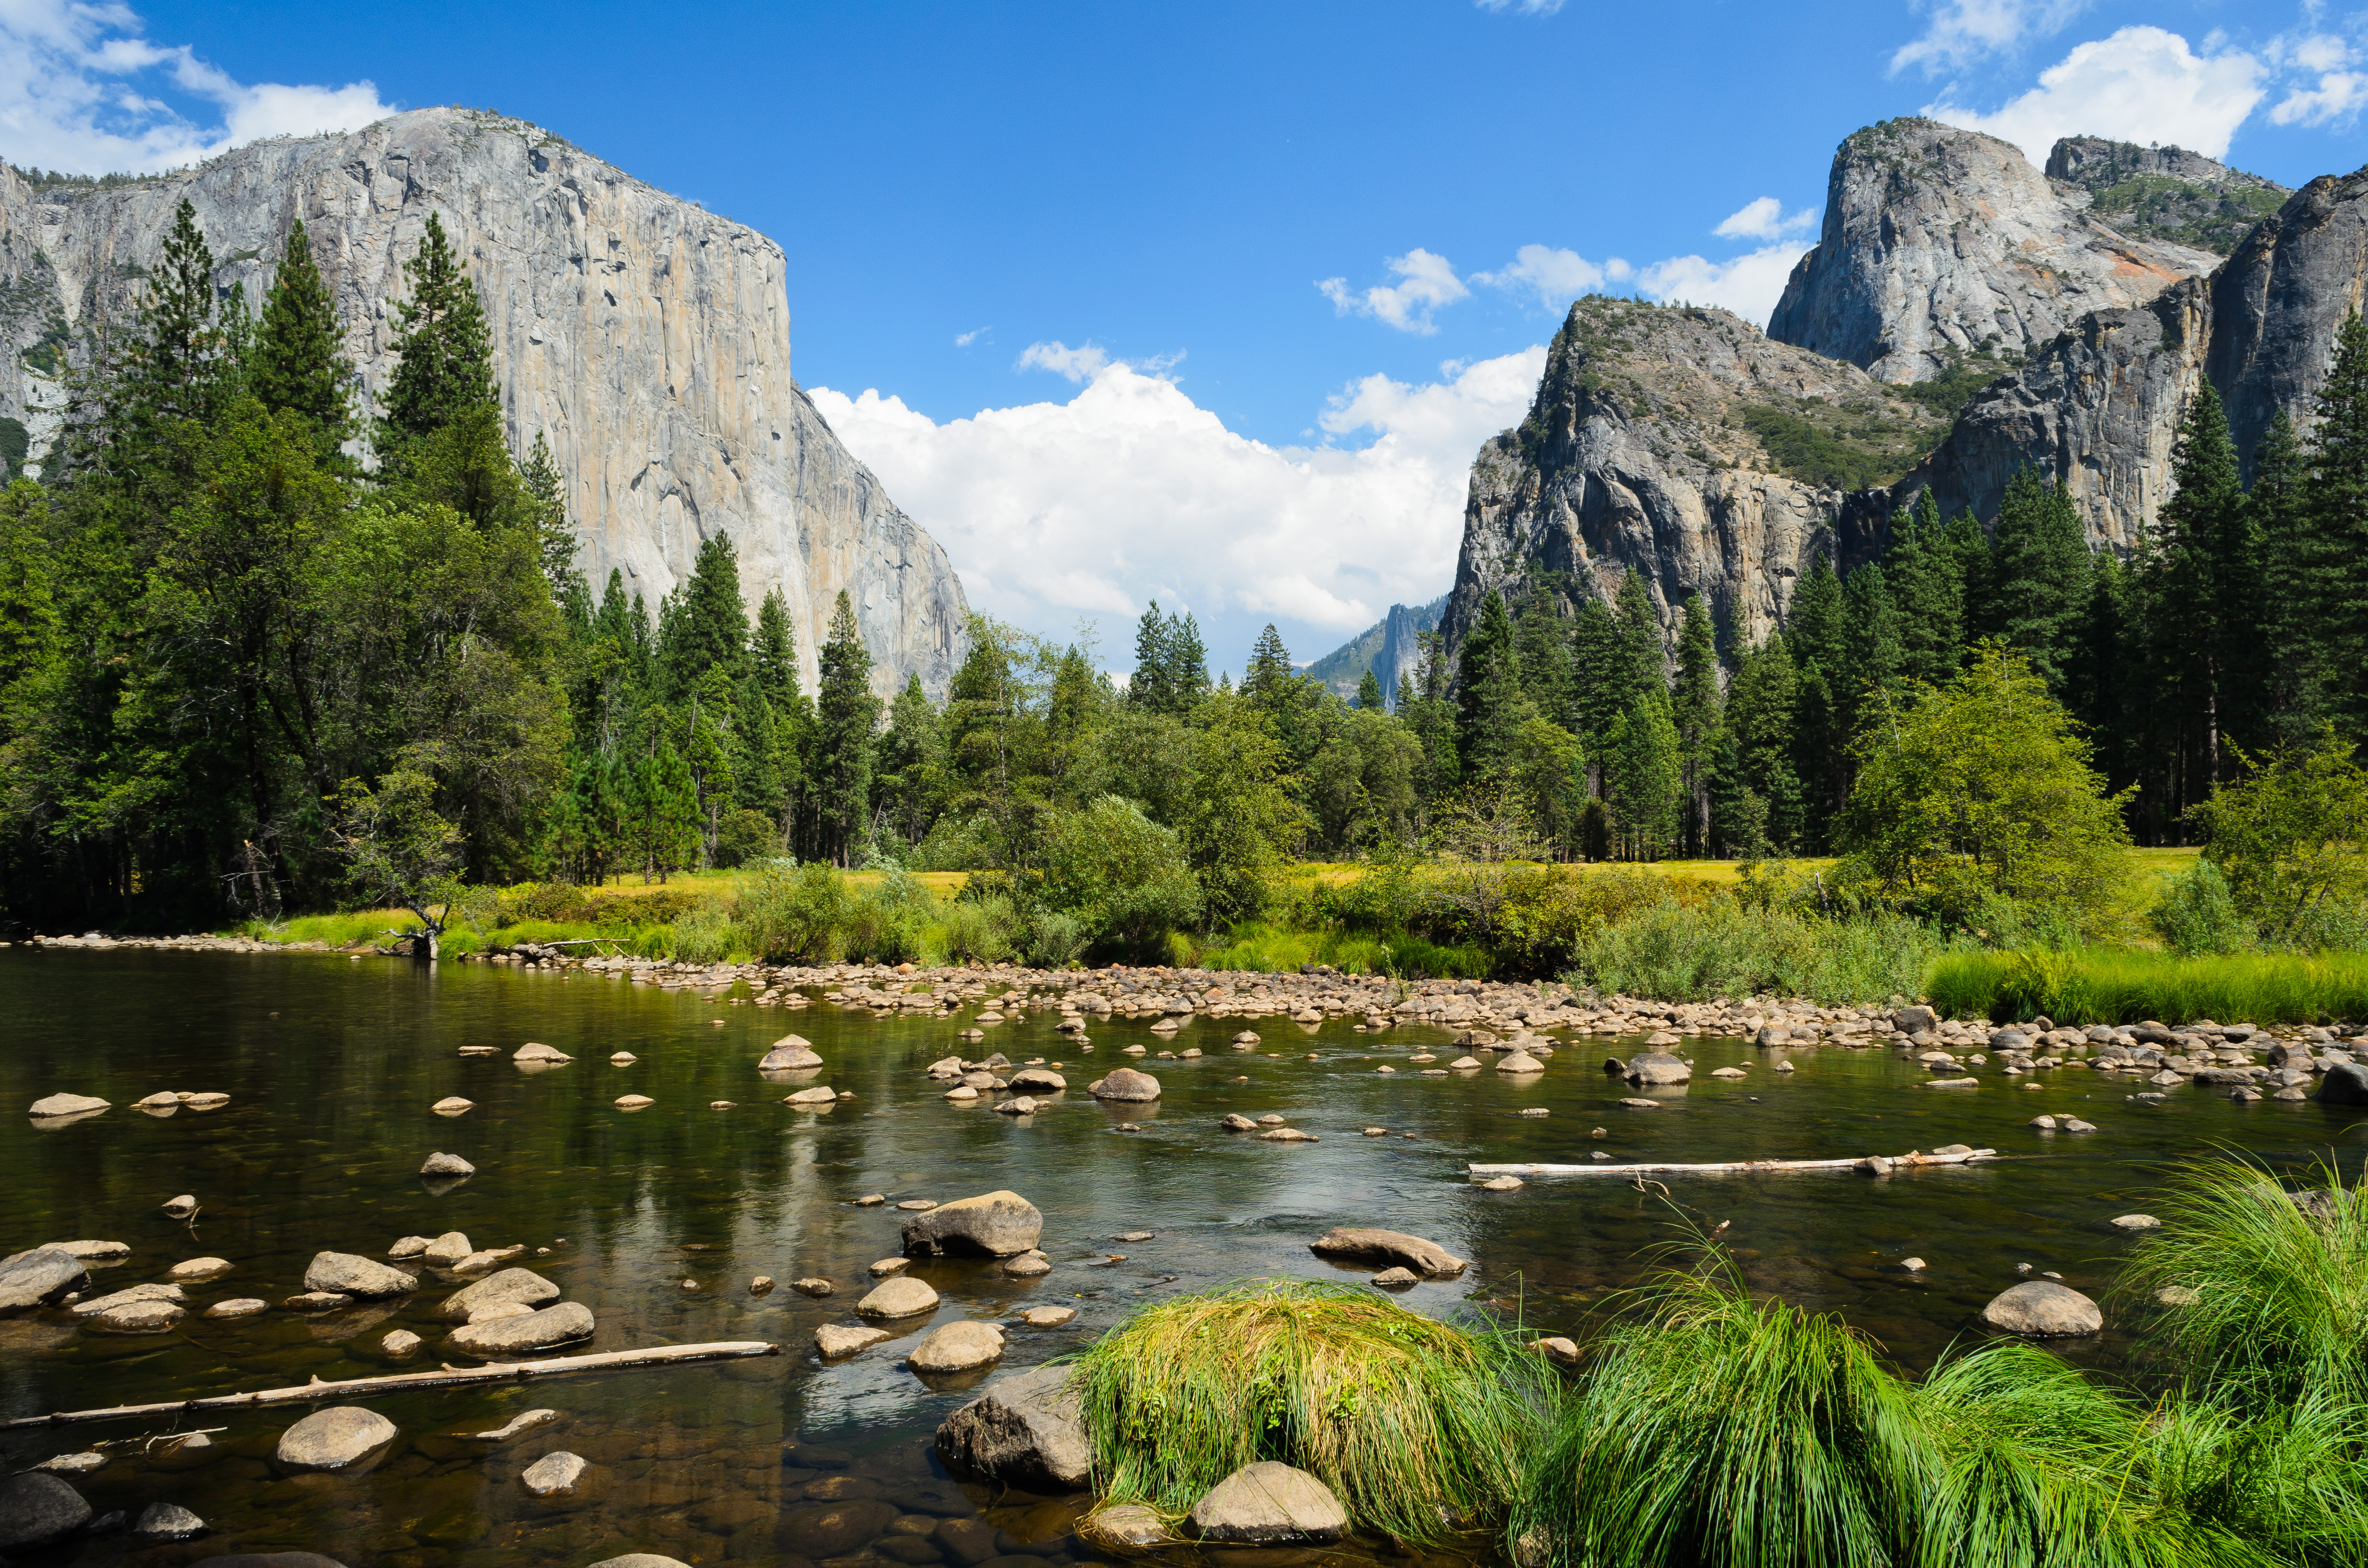 California: Yosemite National Park